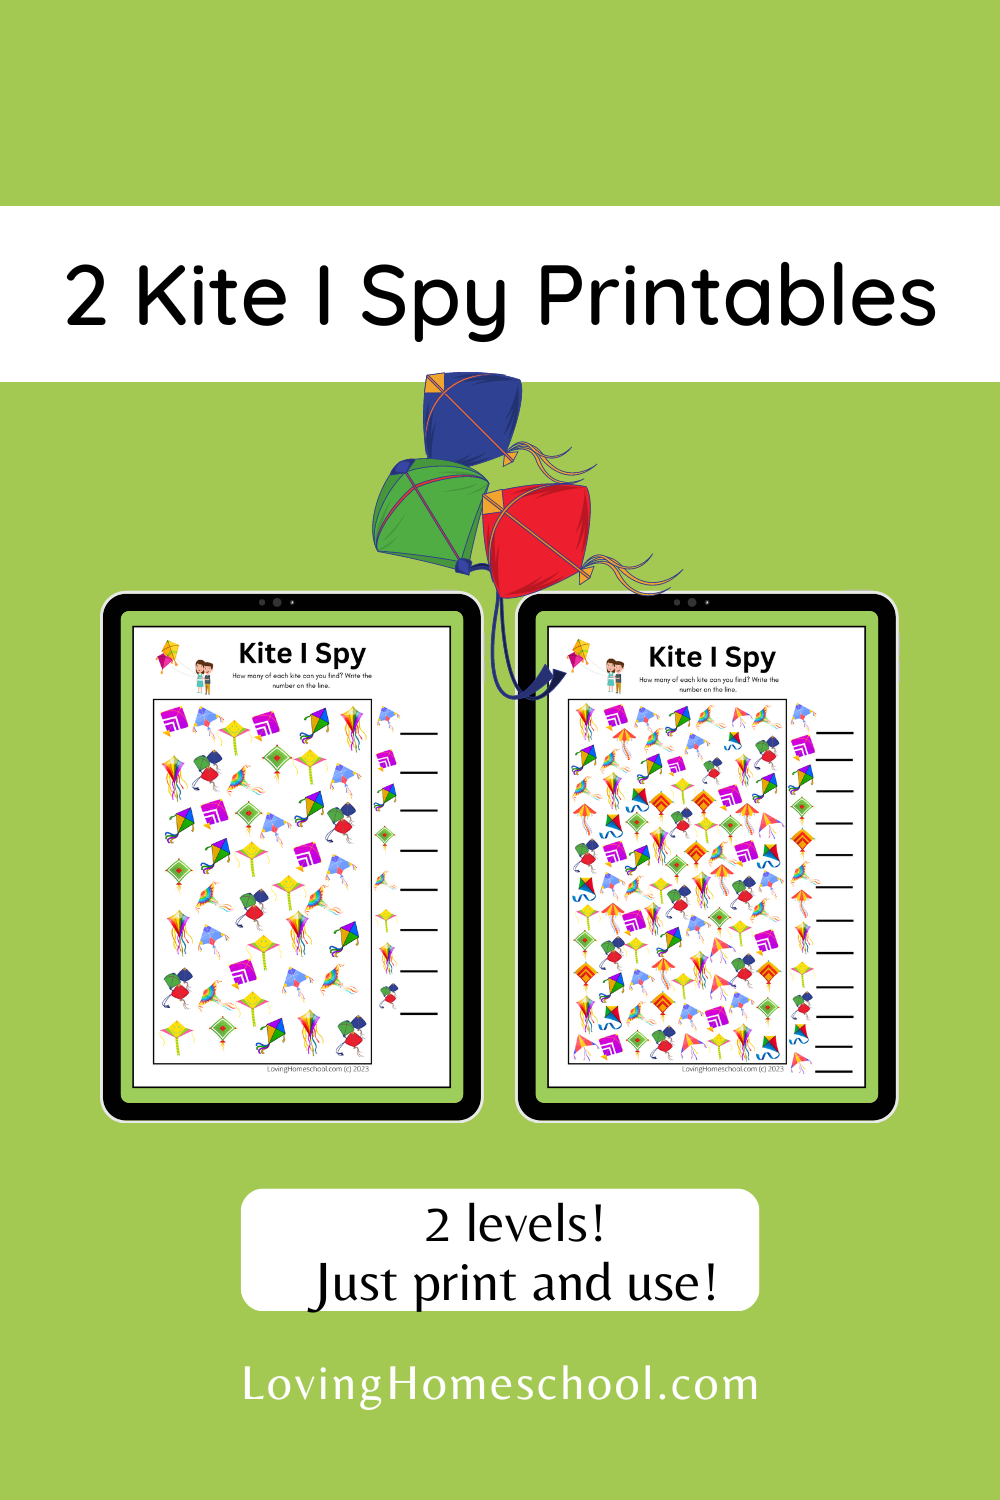 Kite I Spy Printables Pinterest Pin